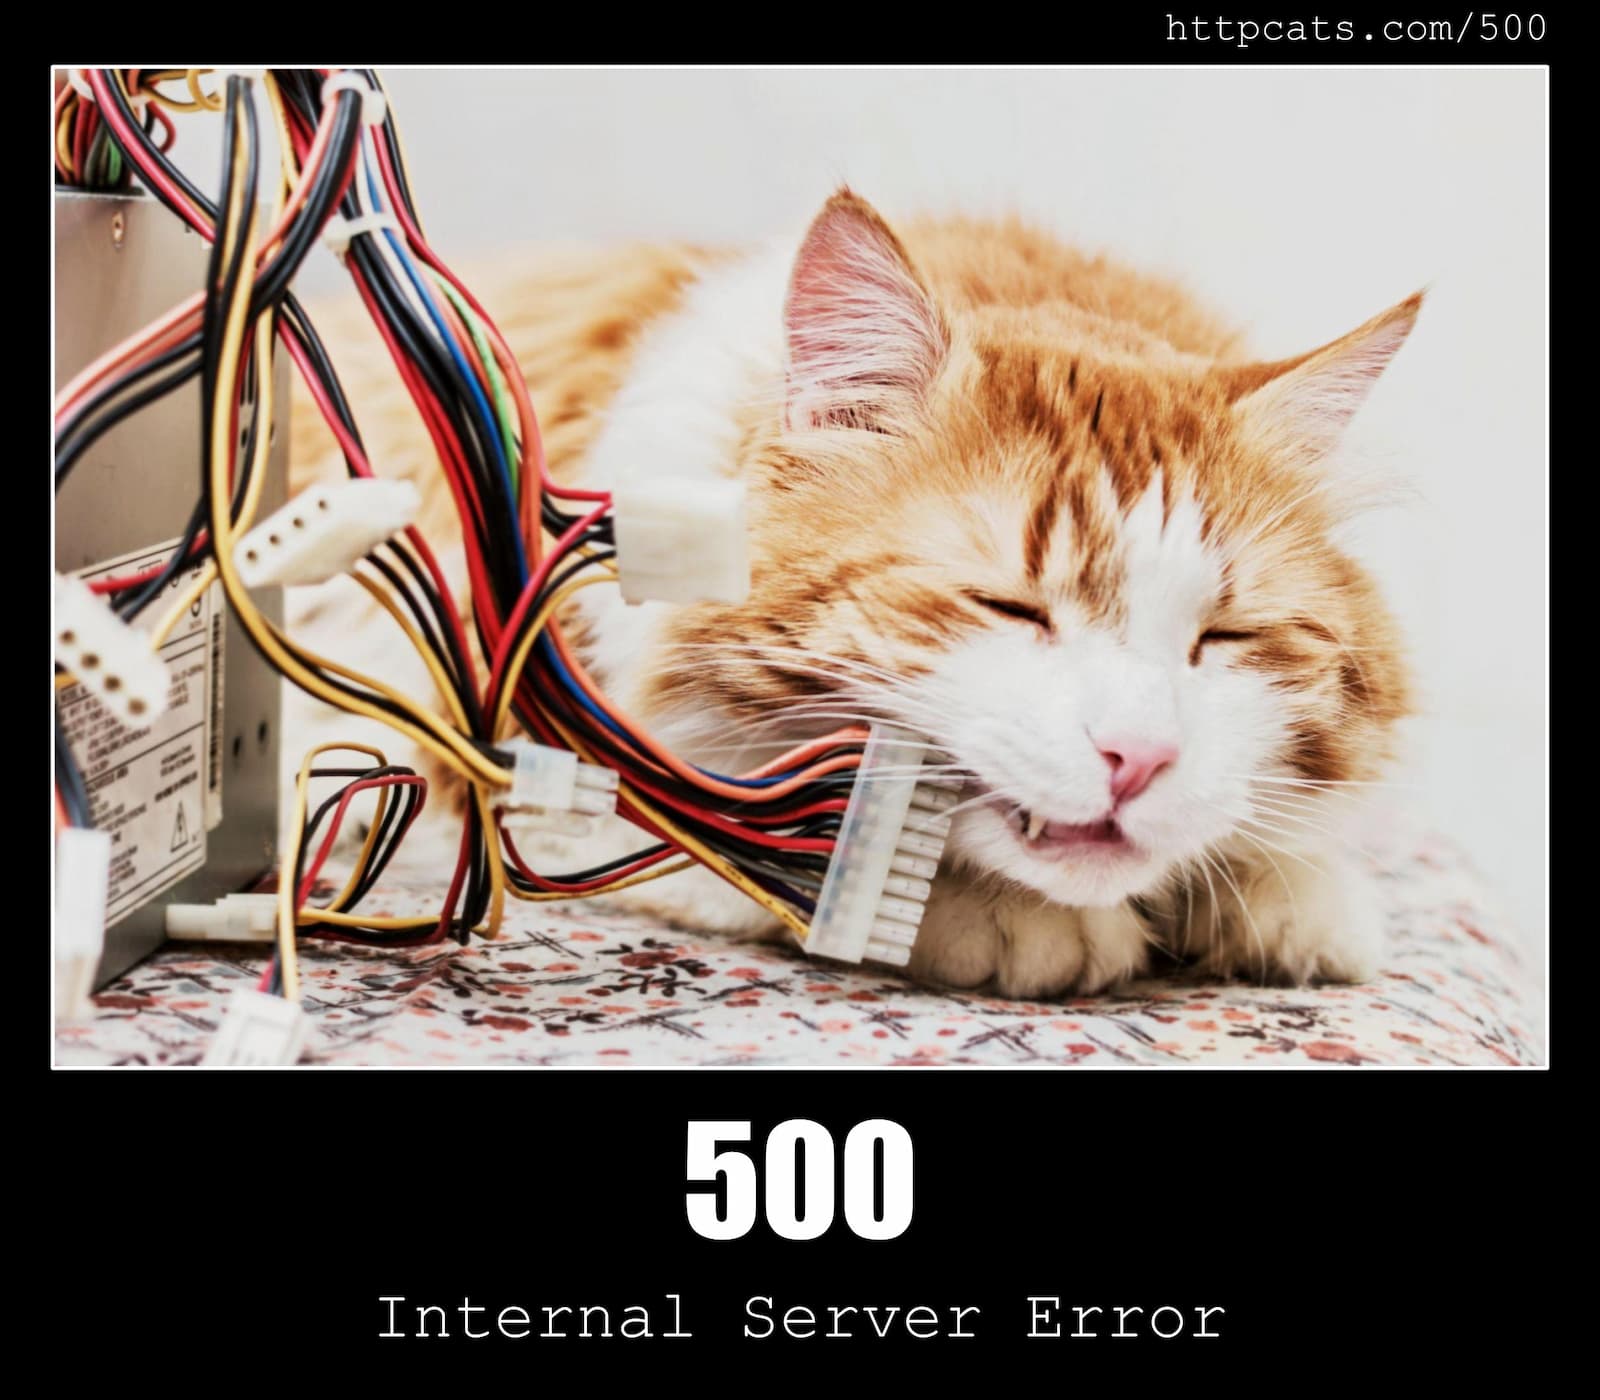 HTTP Status Code 500 Internal Server Error & Cats